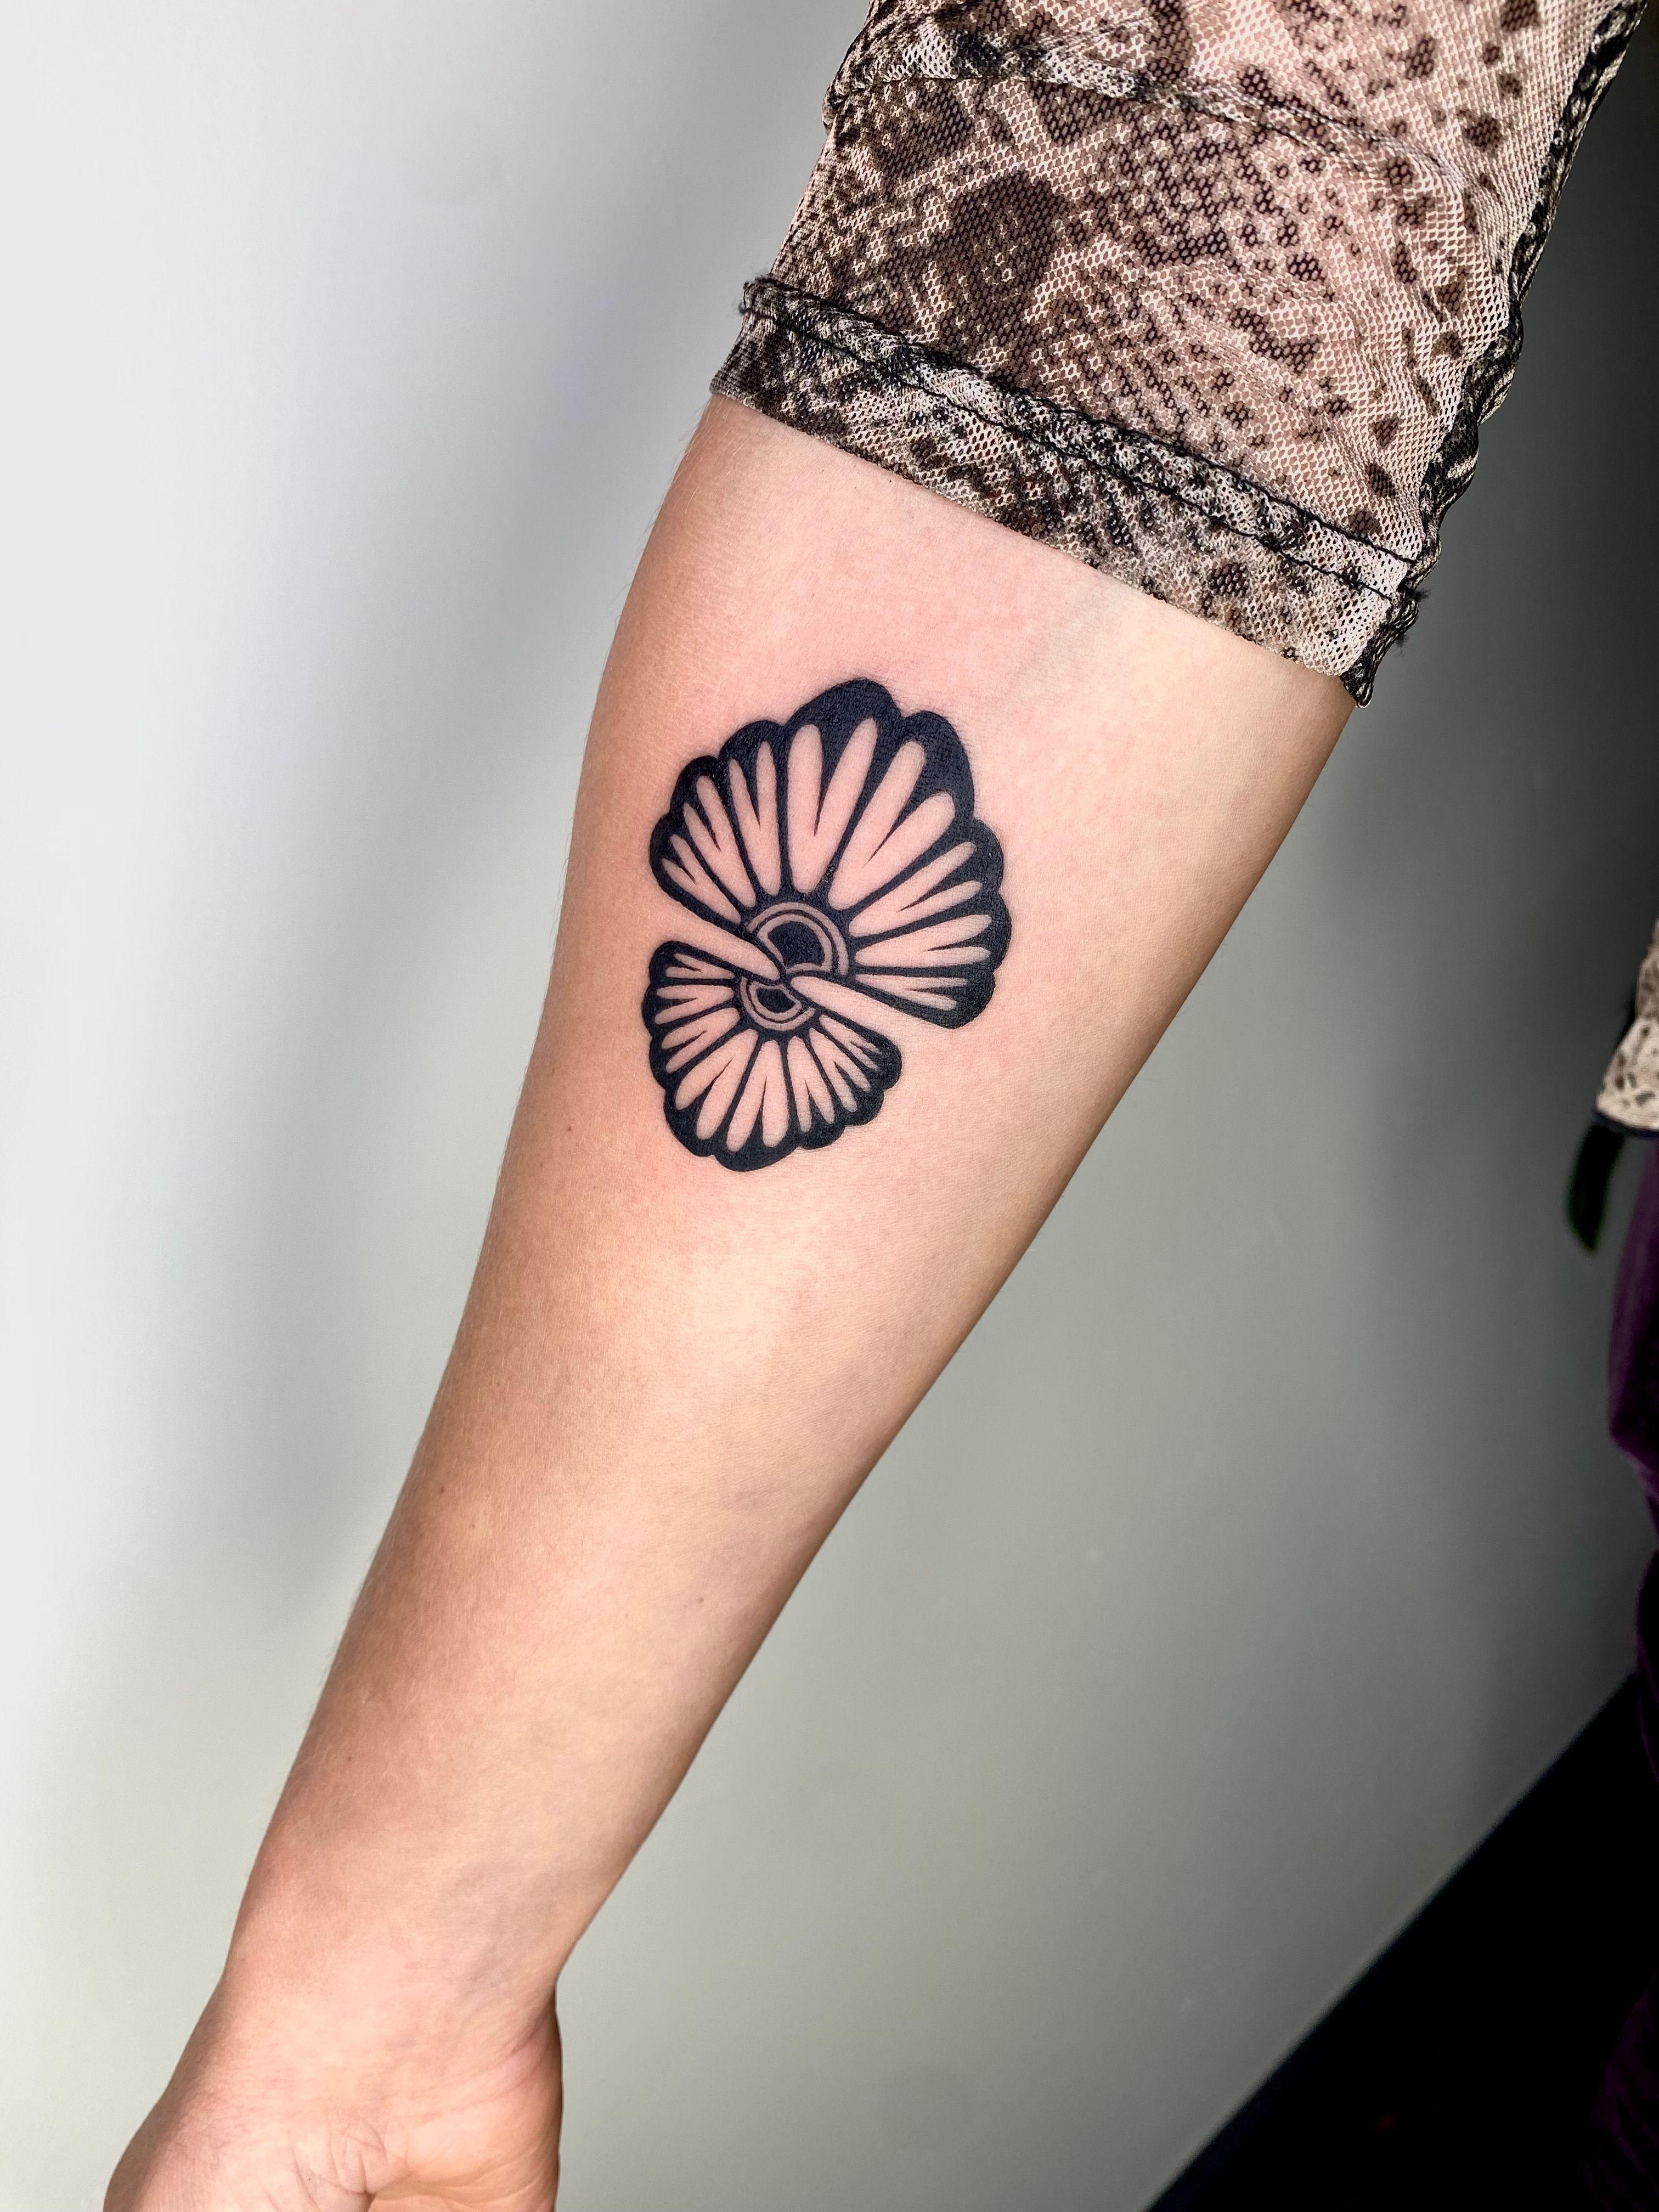 Symmetrical Flower Tattoo by ArtistryAvenue on DeviantArt